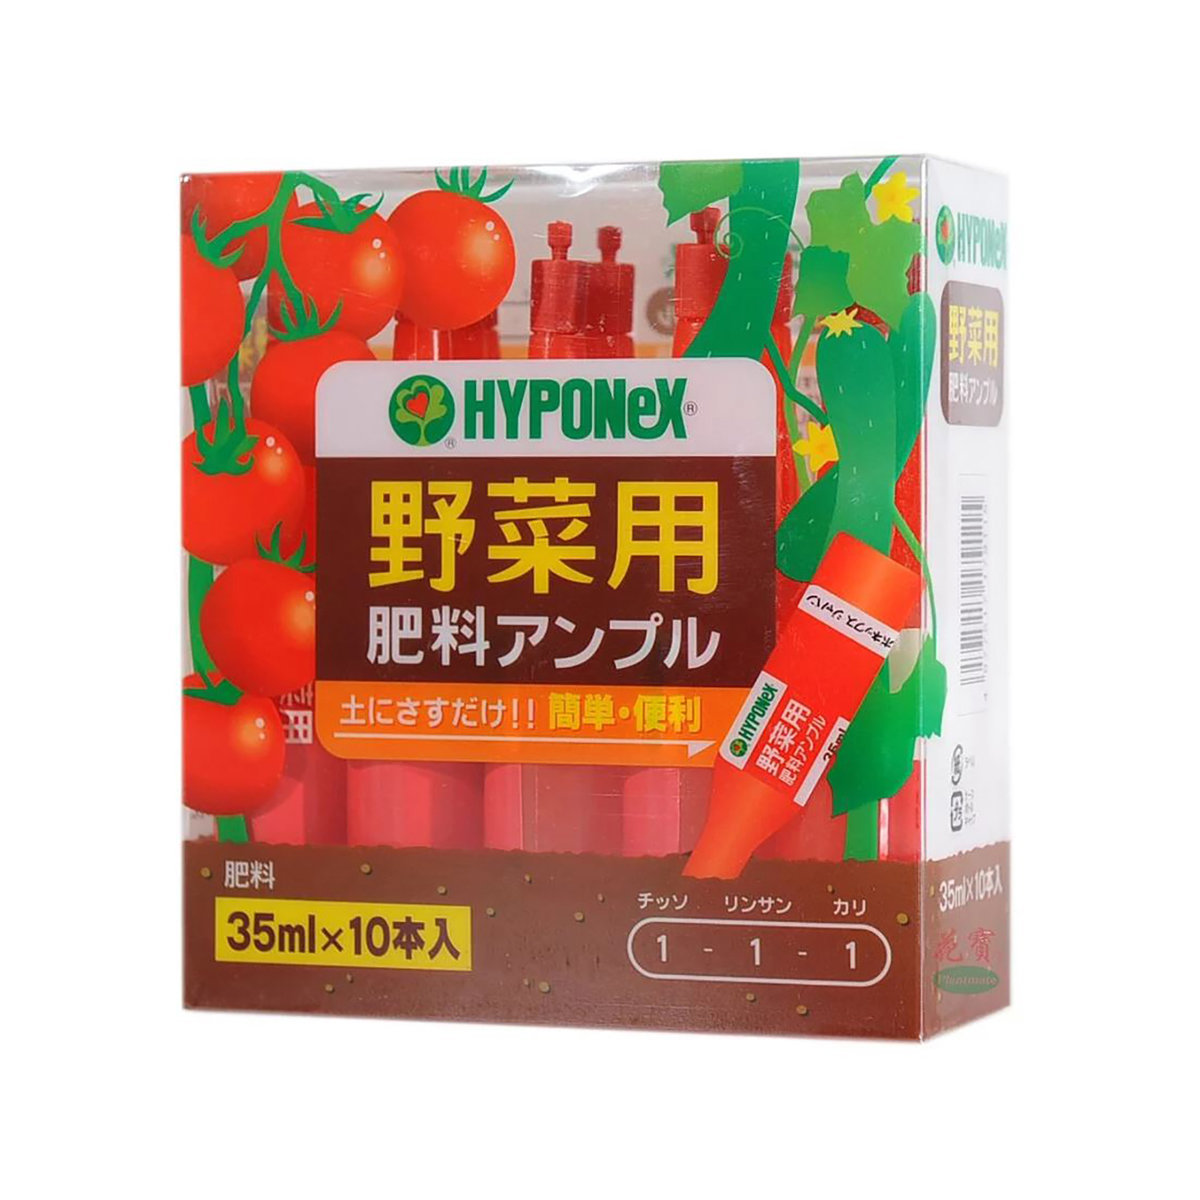 Hyponex 日本花寶野菜植物插支液35ml X 10本入 園藝肥料 Hktvmall 香港最大網購平台